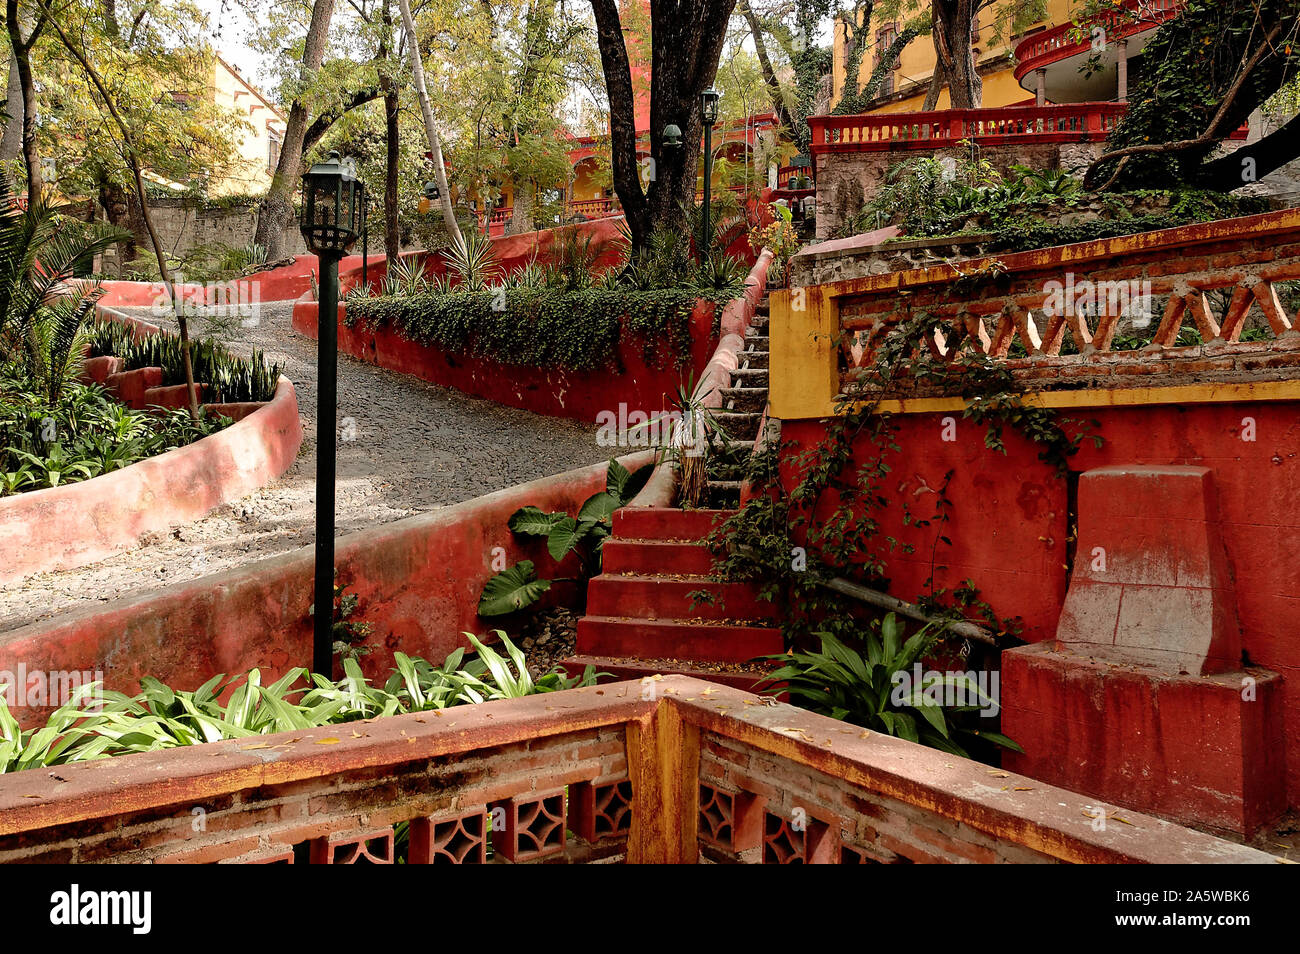 San Miguel de Allende, Guanajuato, Mexico - December 5, 2004: View of 'Paseo del Chorro' Stock Photo